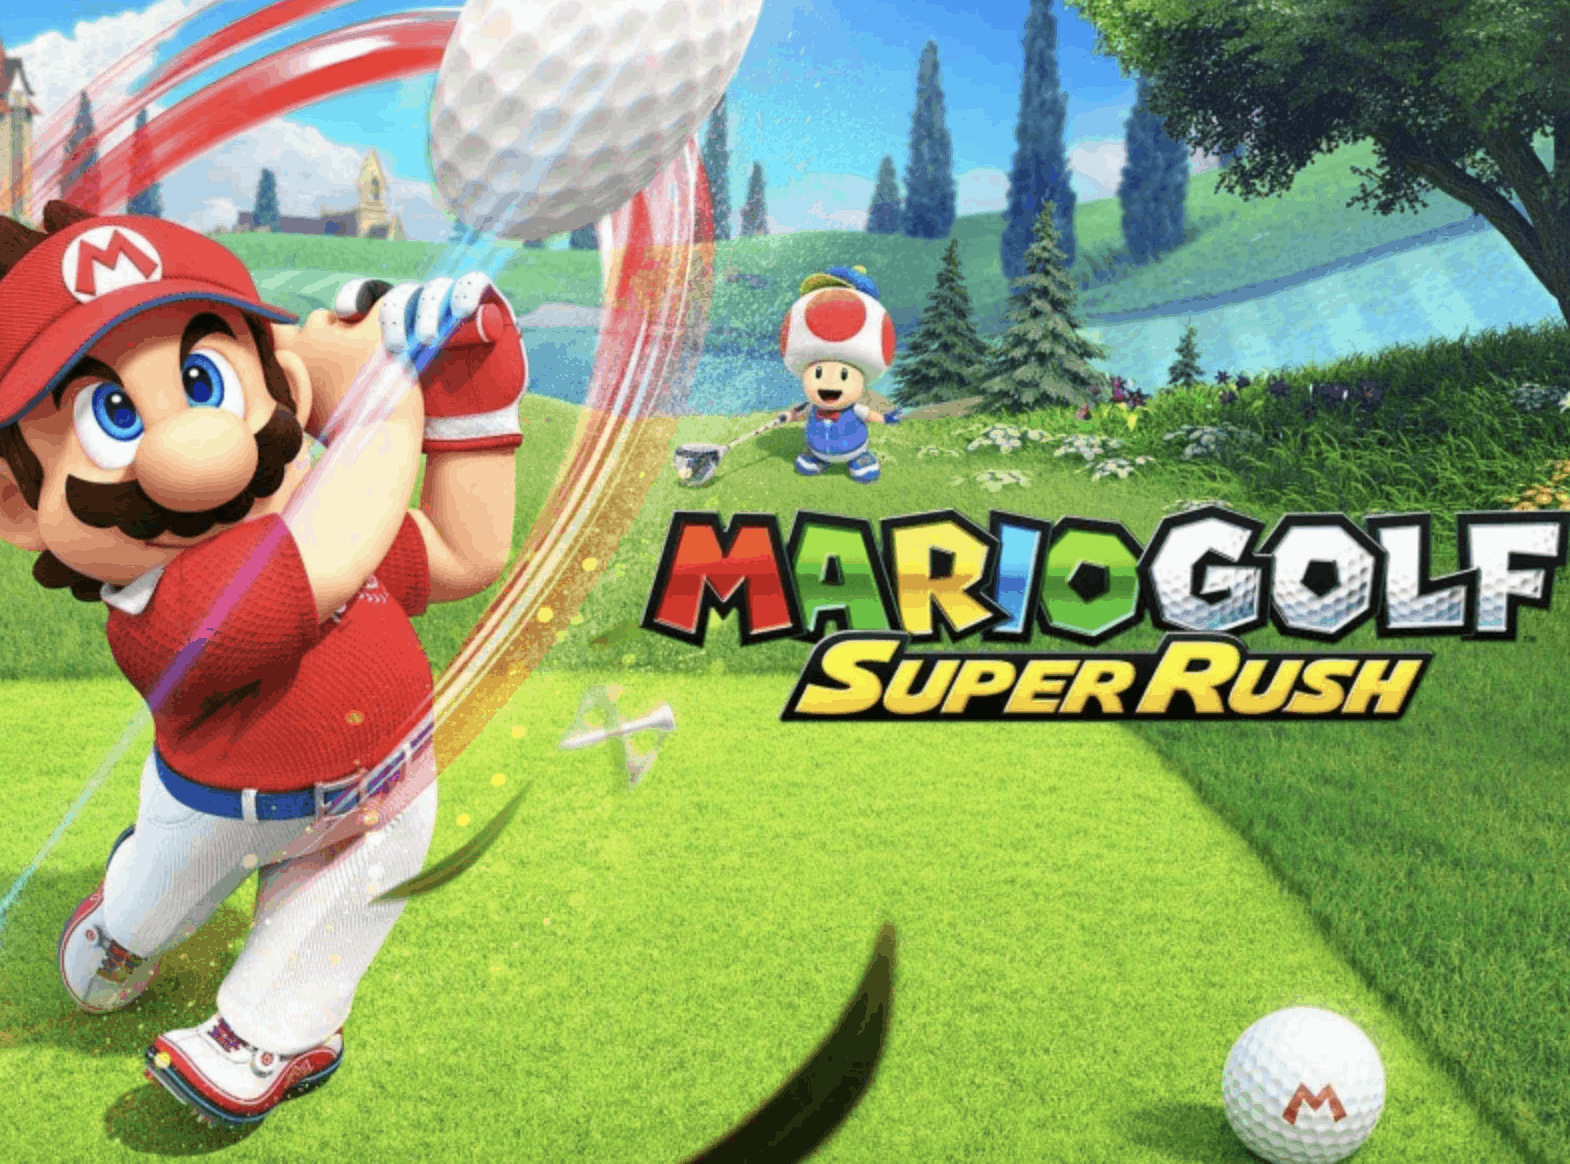 Mario Golf Game Night Fun with Your Nintendo Switch